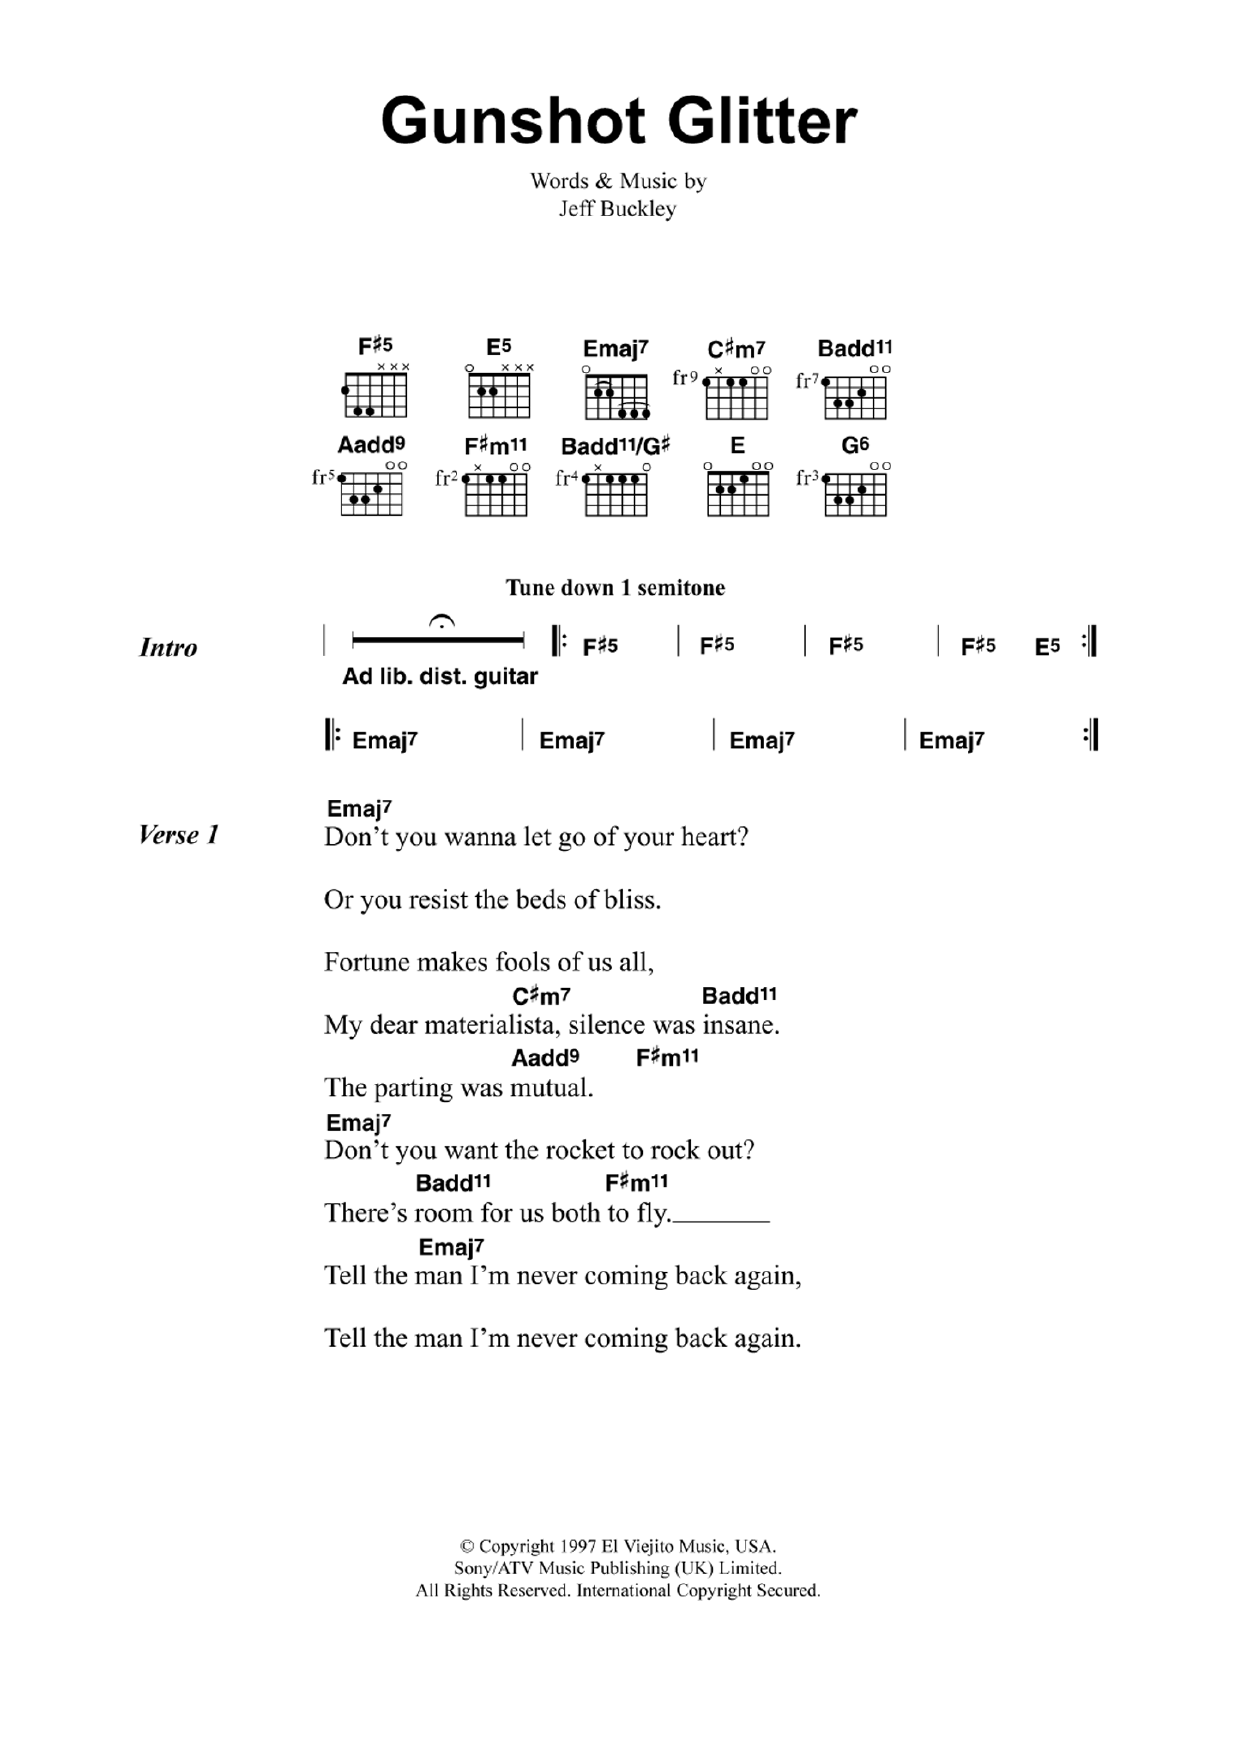 Jeff Buckley Gunshot Glitter Sheet Music Notes & Chords for Guitar Chords/Lyrics - Download or Print PDF